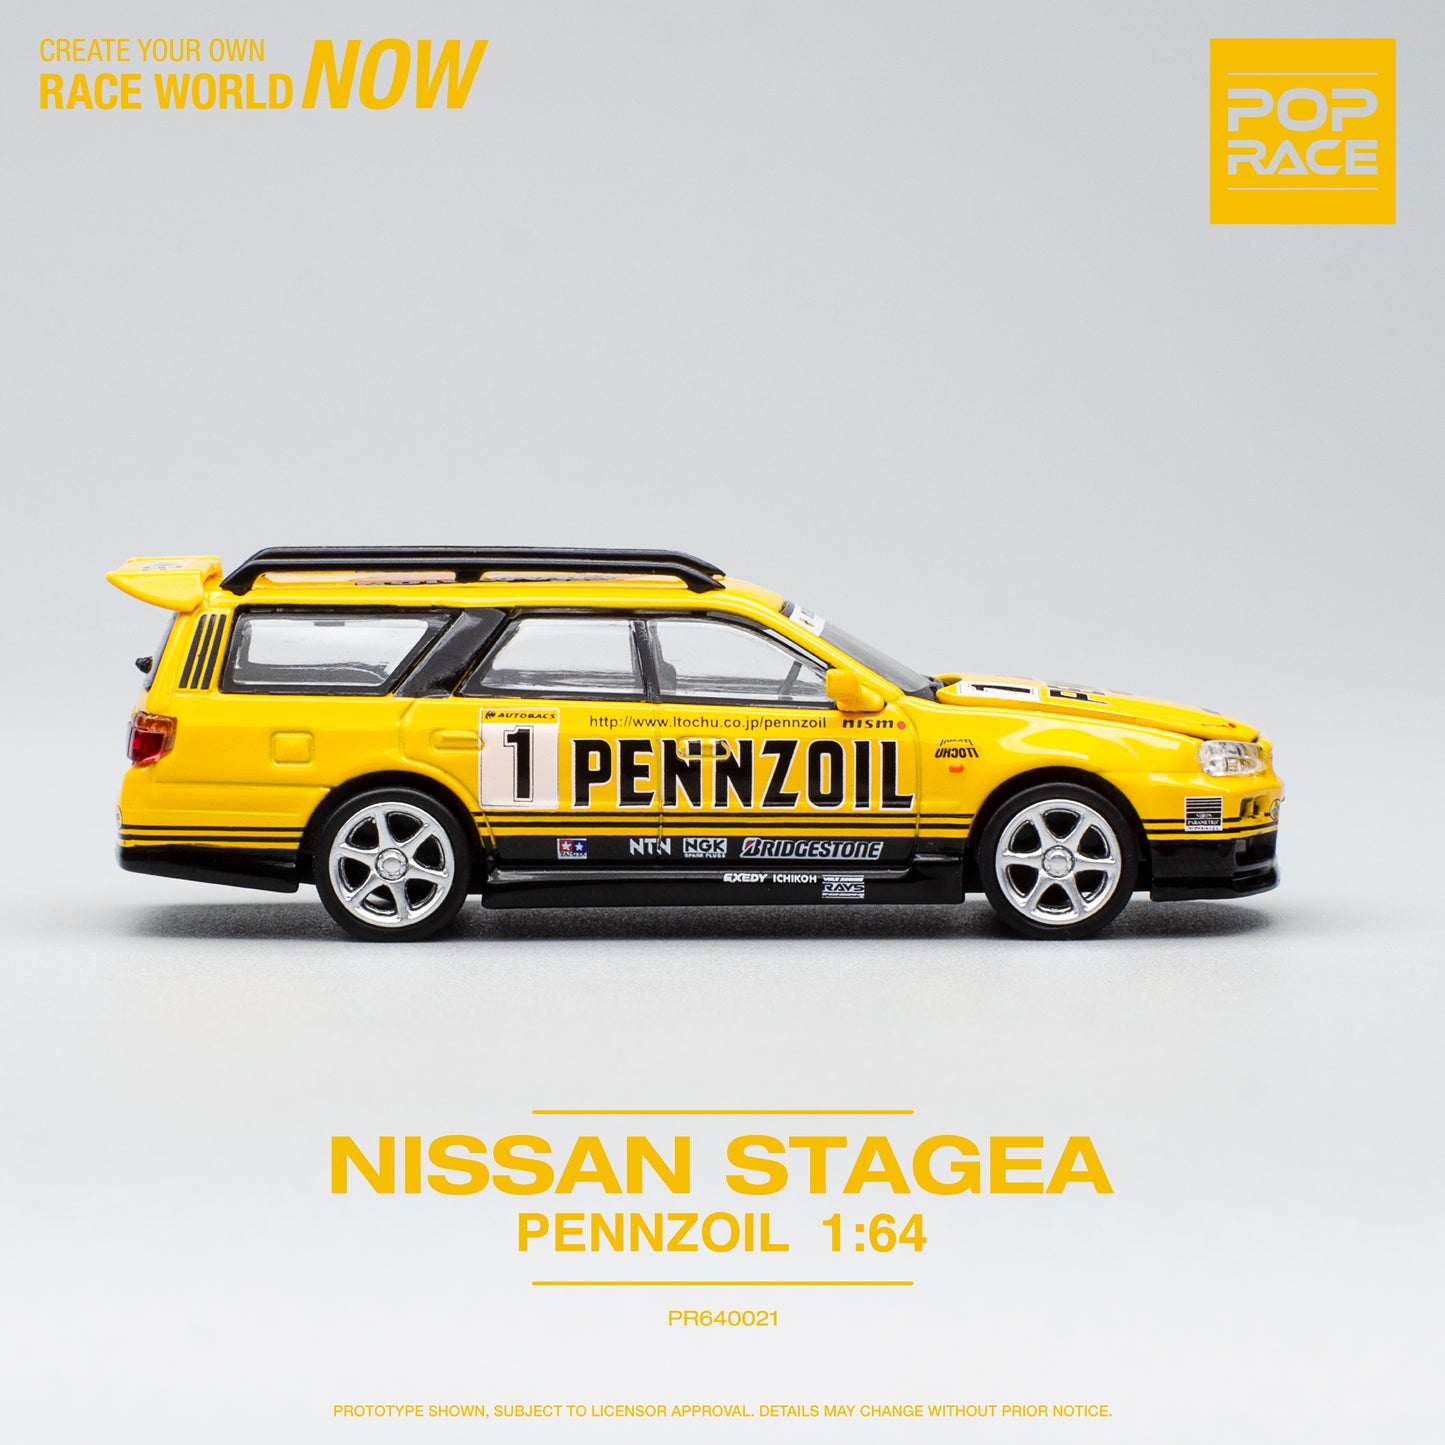 Pop Race Nissan Stagea Pennzoil 1:64